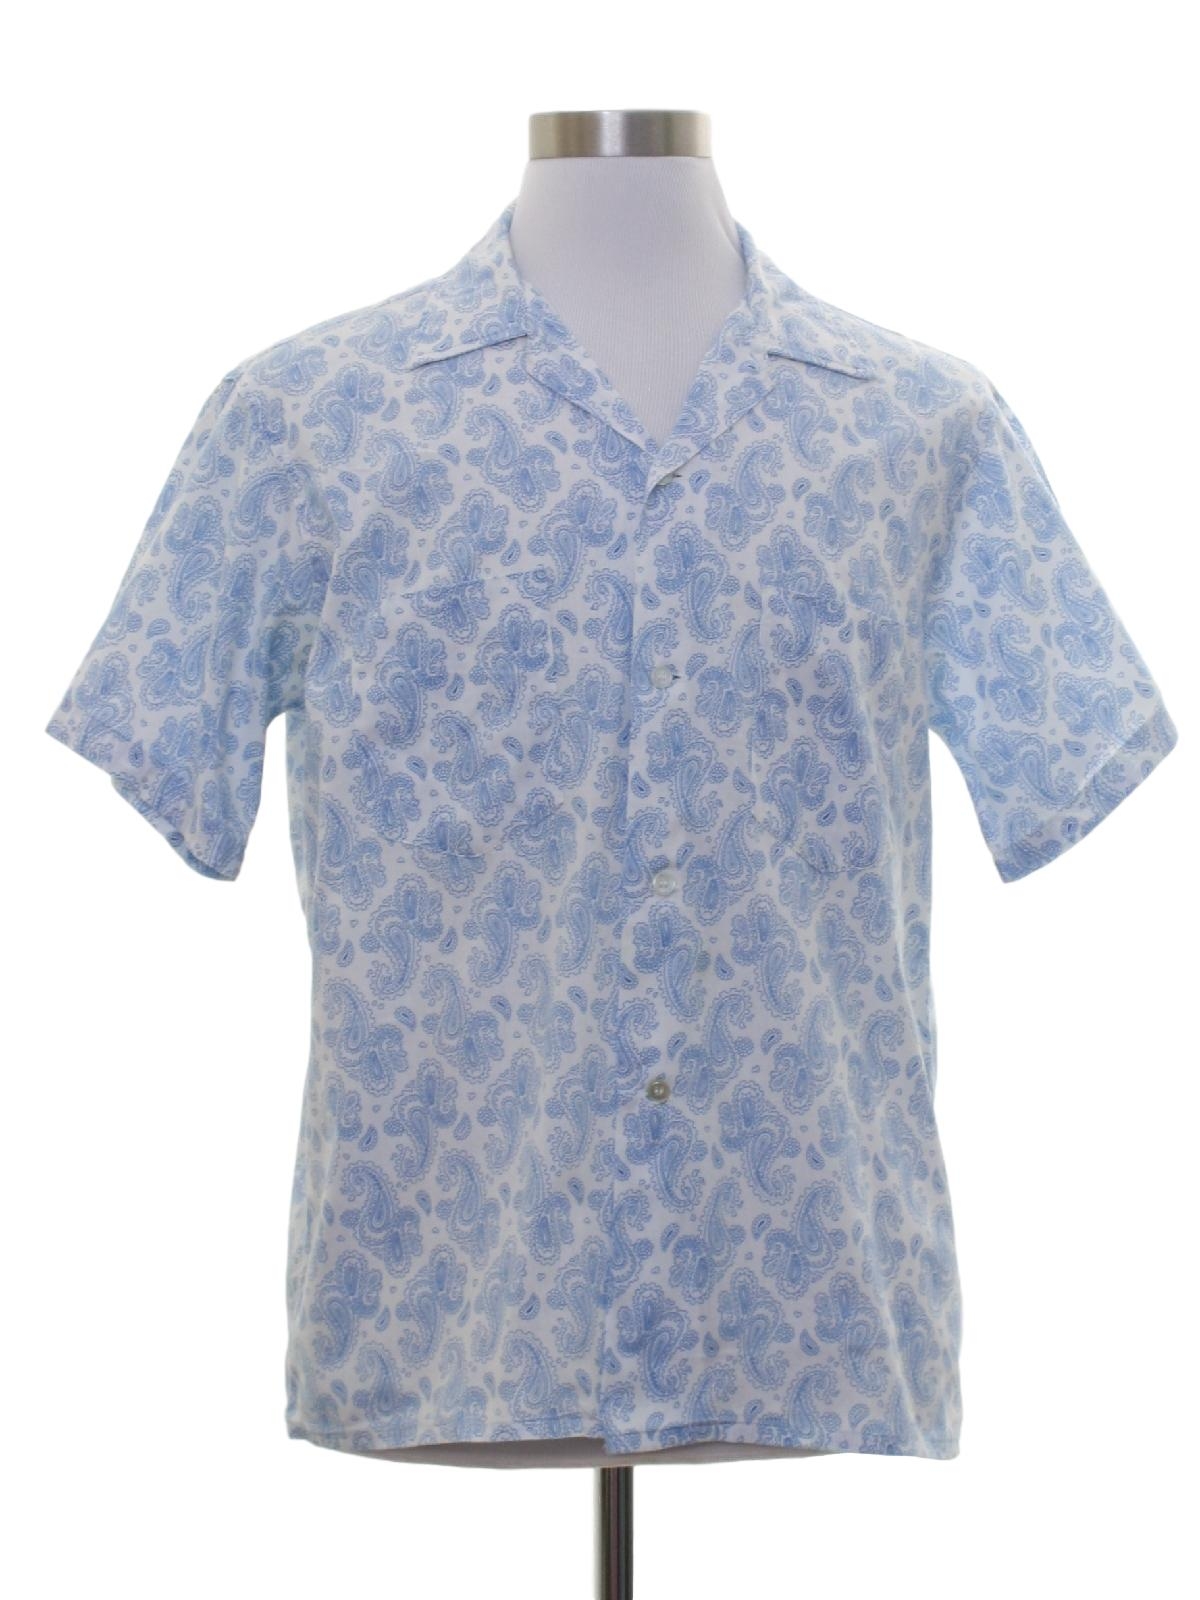 Retro 1950's Shirt (Wearever Sanforized) : Late 50s -Wearever ...